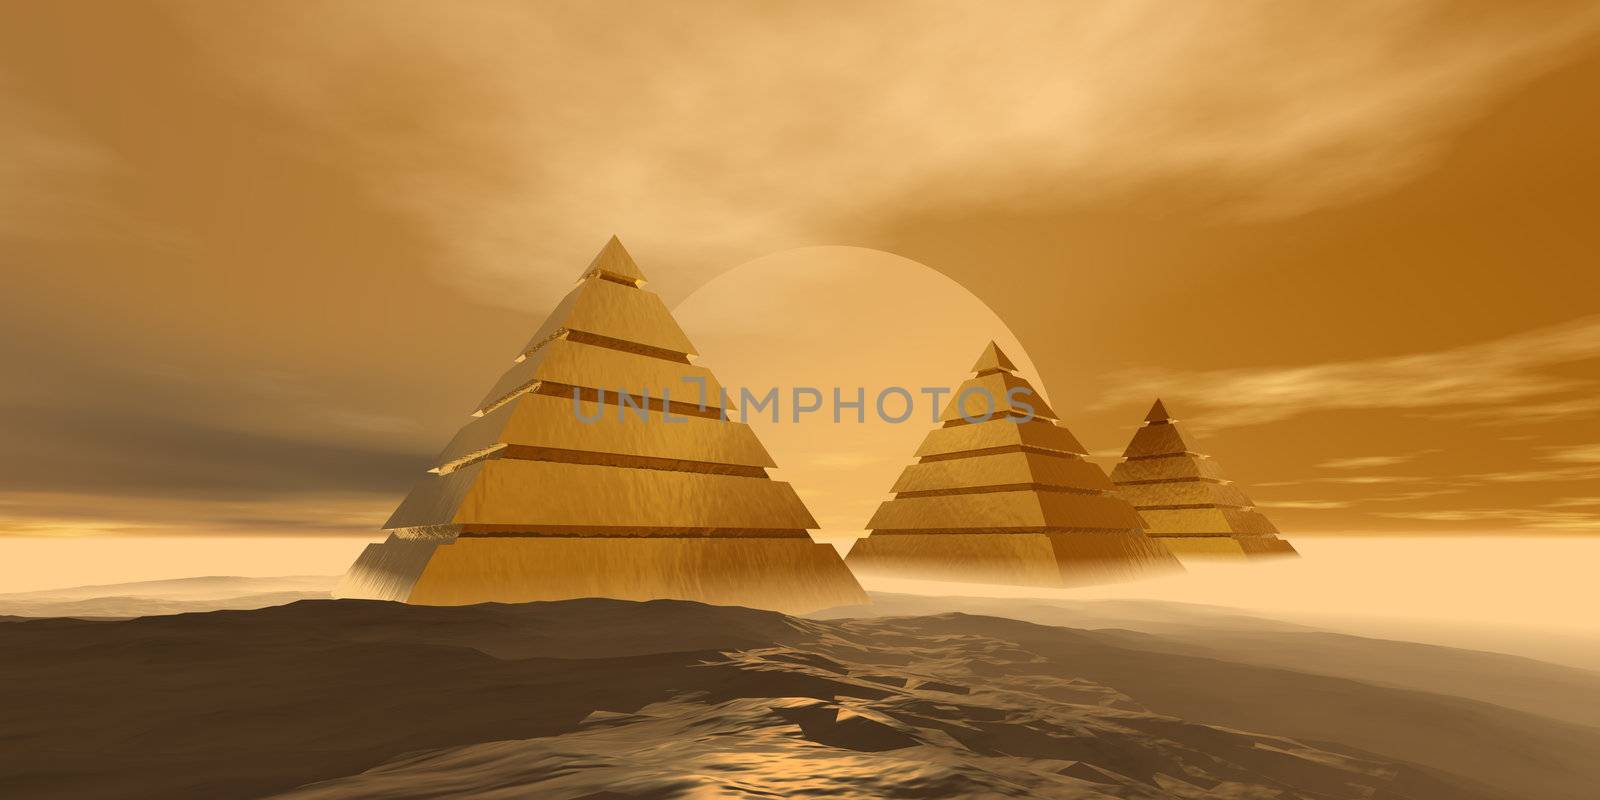 Three imposing golden pyramids in the desert.